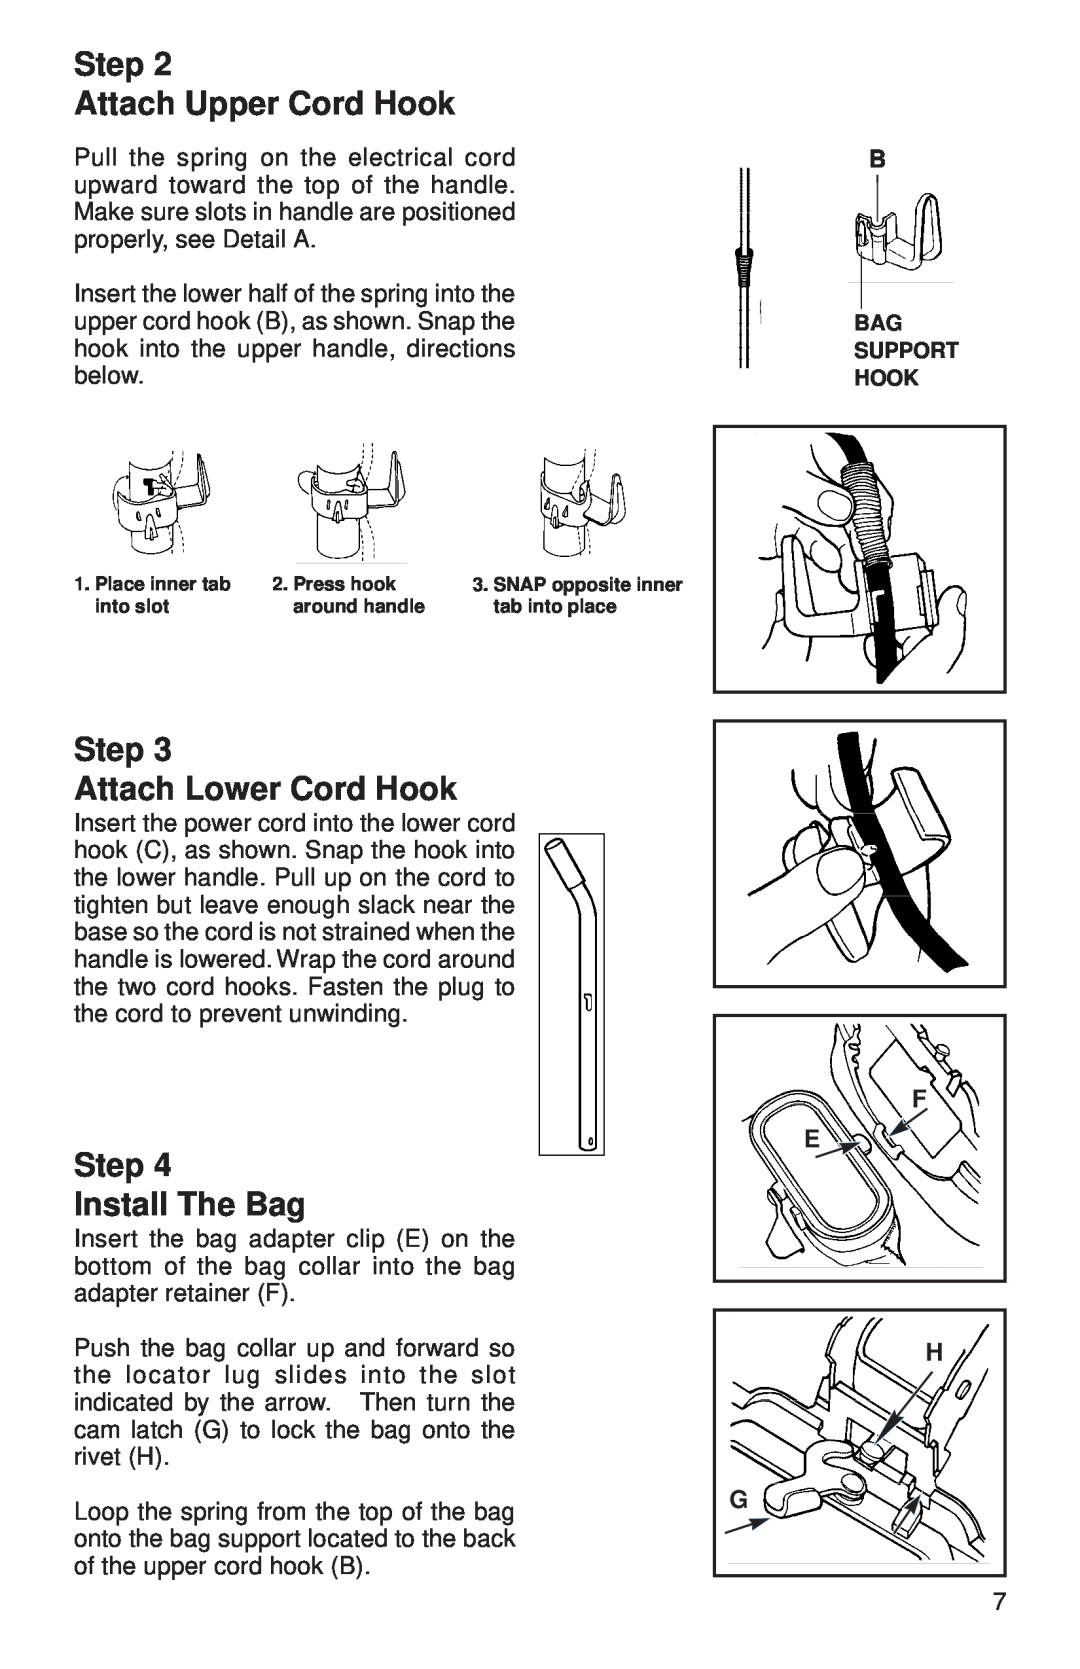 Sanitaire SC899 warranty Step Attach Upper Cord Hook, Step Attach Lower Cord Hook, Step Install The Bag 